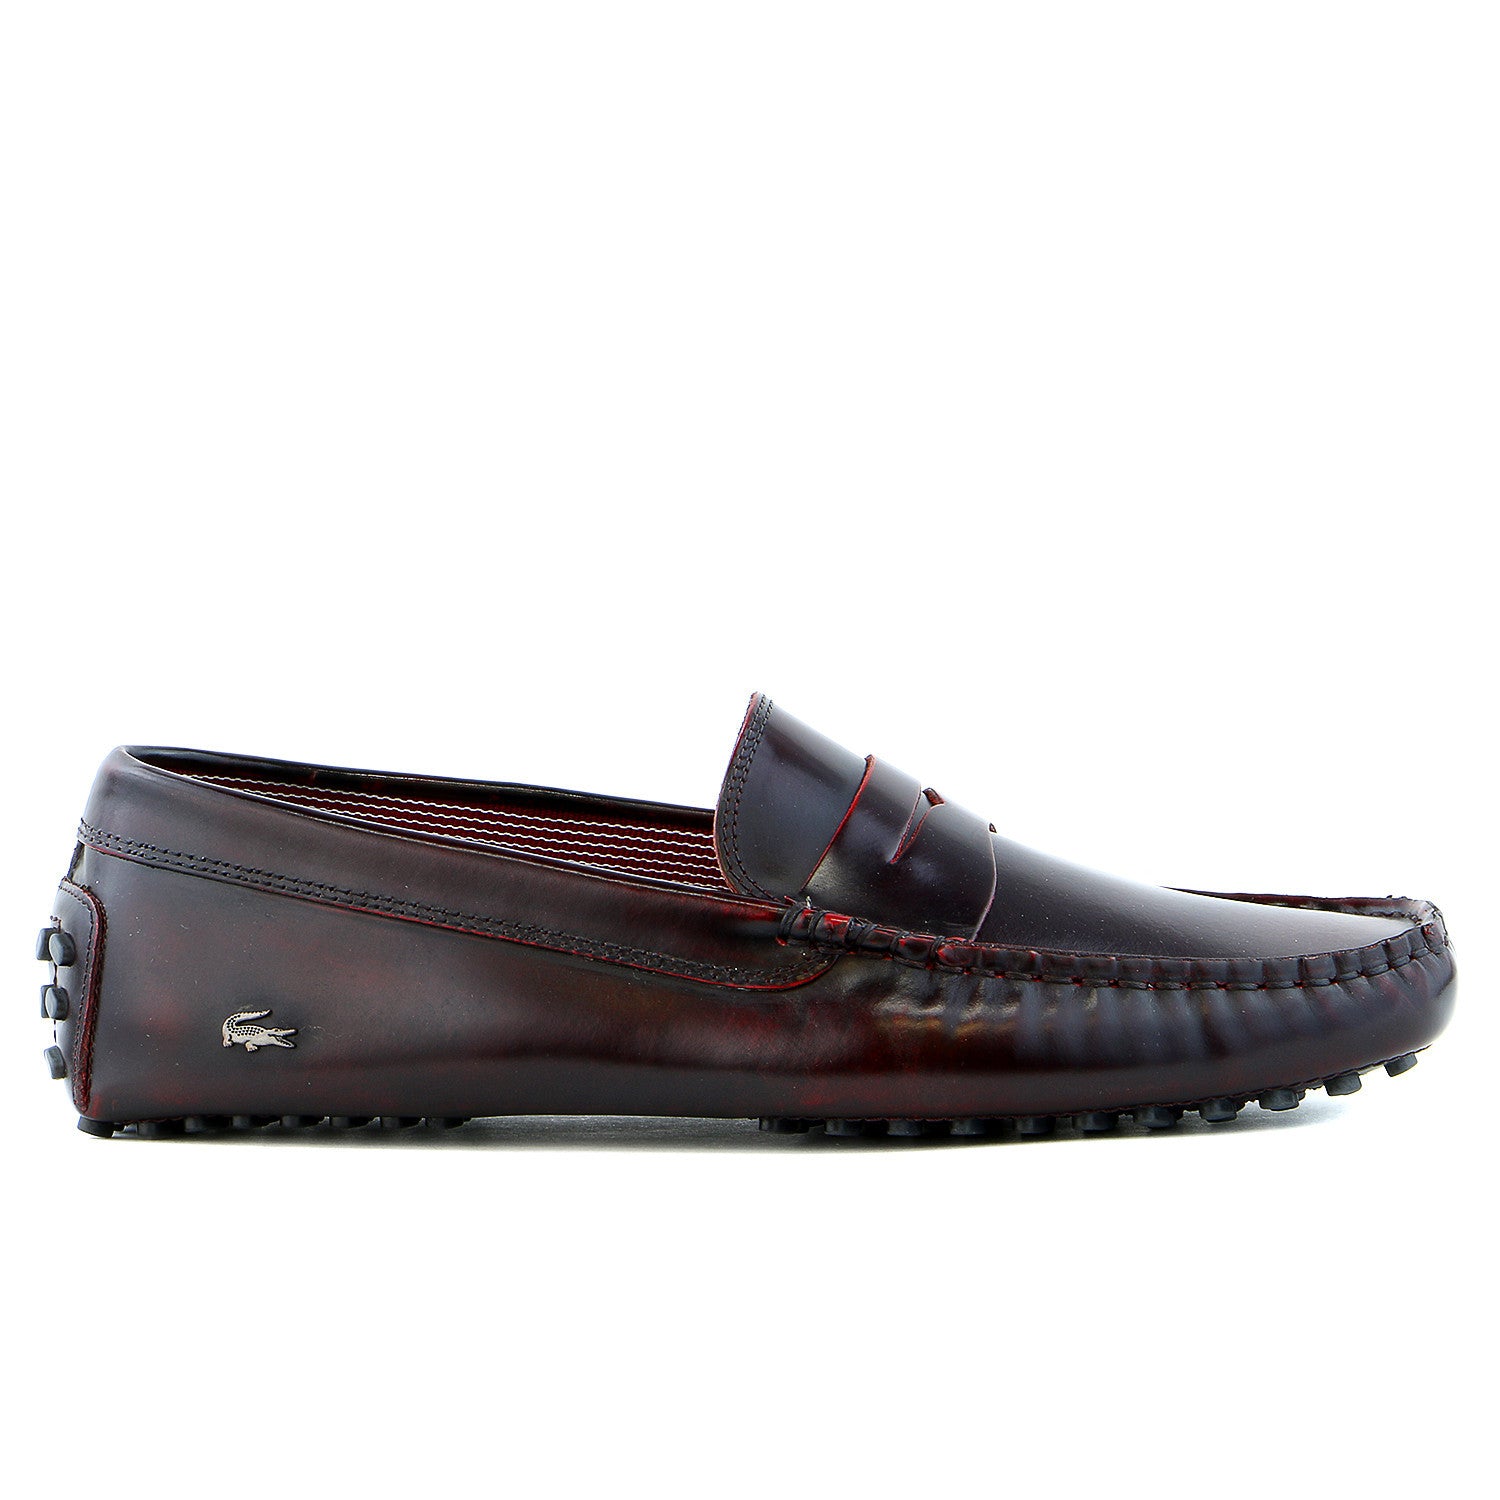 15 SRM Driver Moccasin Loafer Fashion Shoe - Dark Bro Shoplifestyle